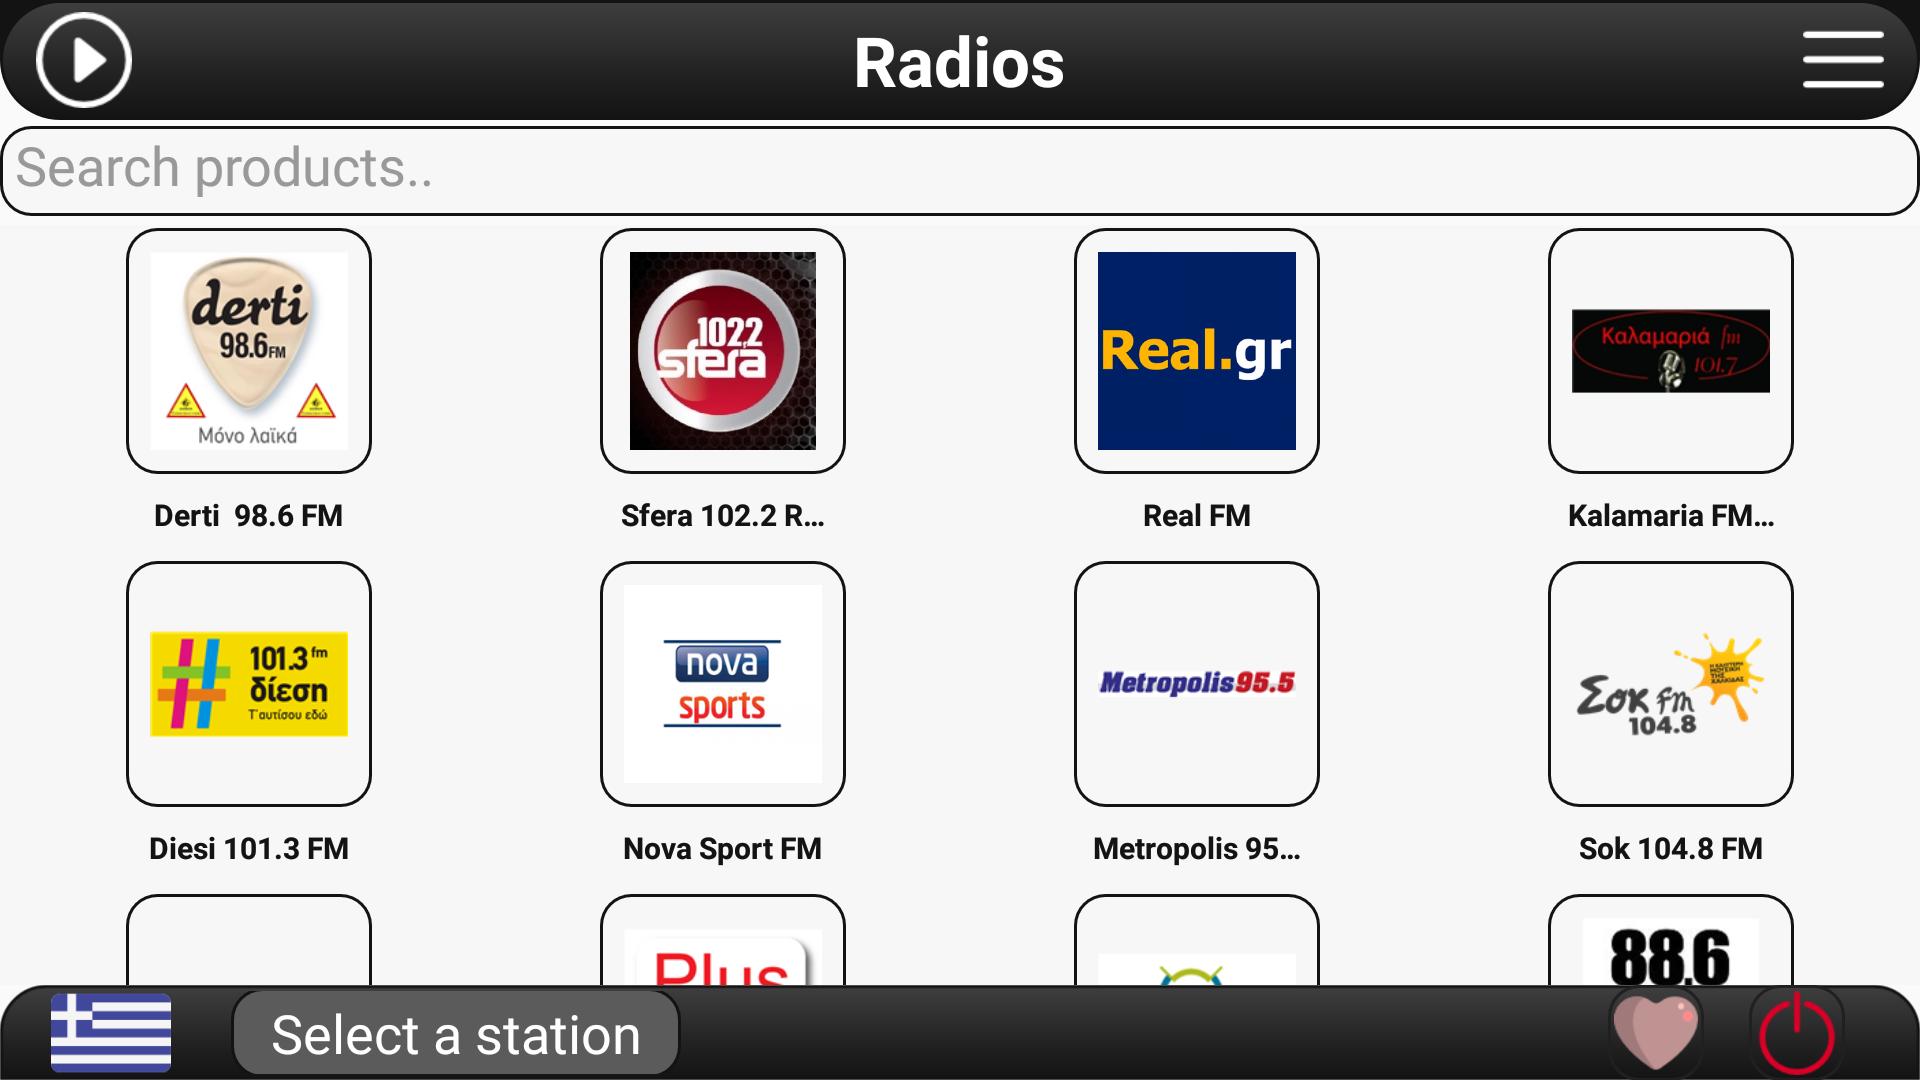 Топ чат радио. Сфера радио Греция. Радио Луки fm. Радио богатырь ФМ. Радио чат.